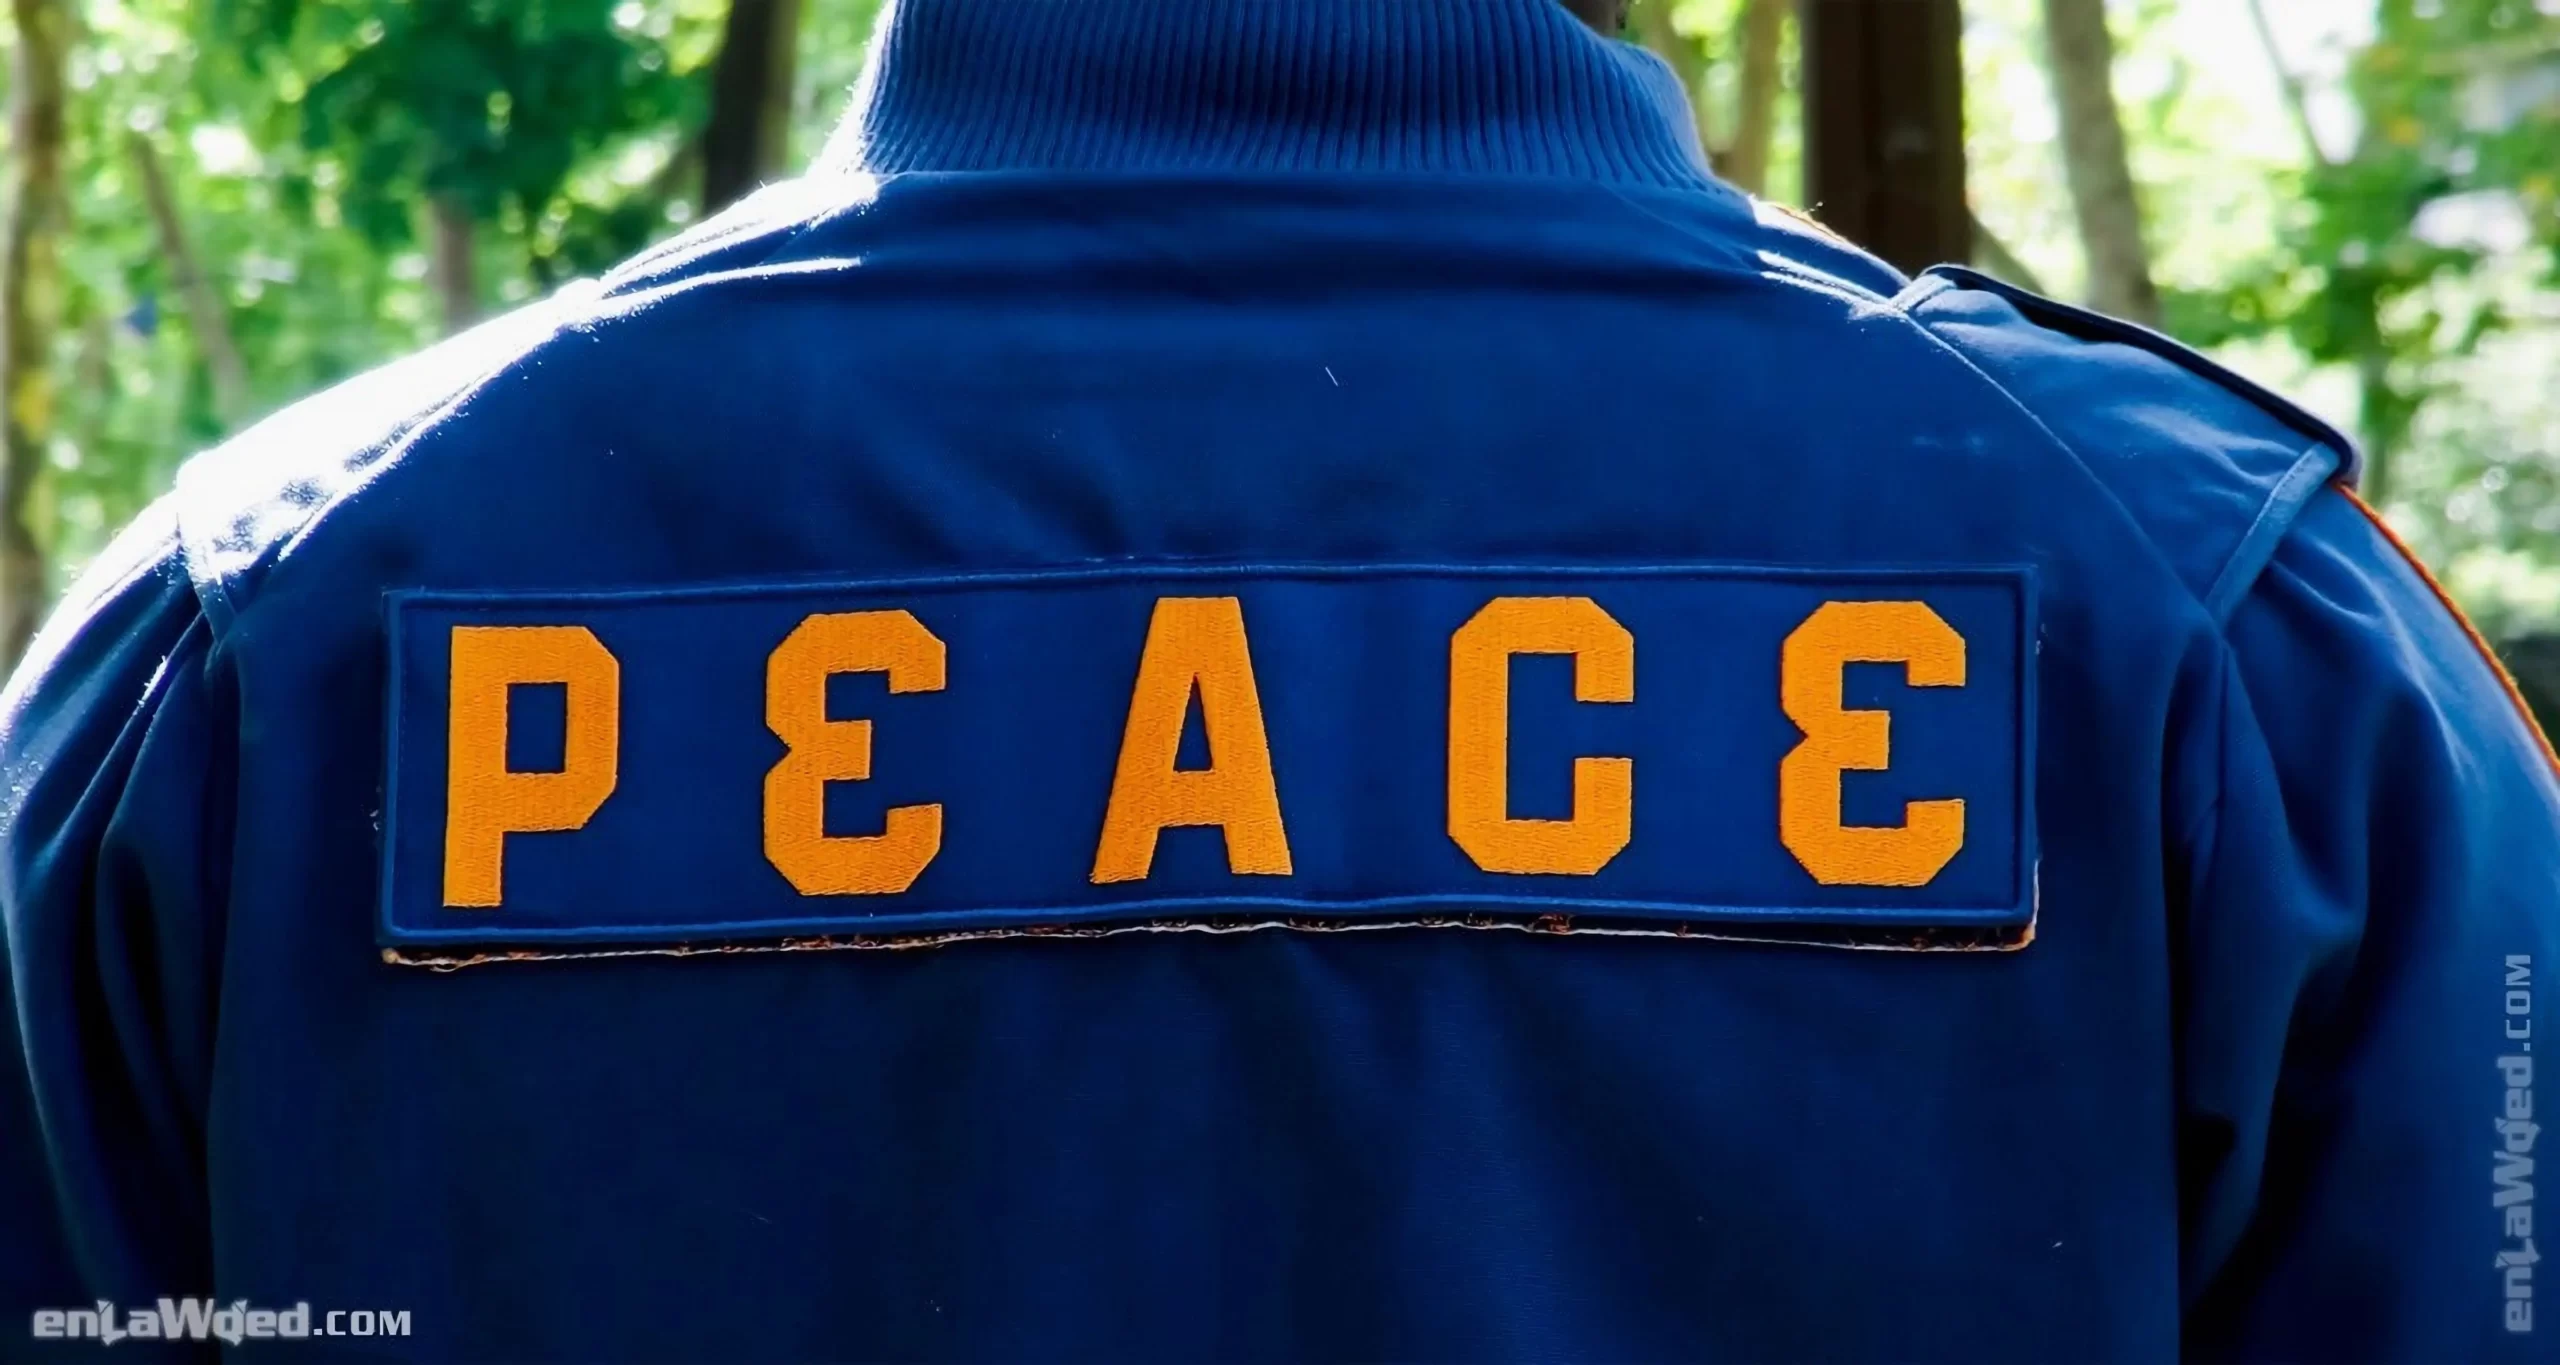 Men’s 2005 Adidas Originals Military Peace Jacket: Unstoppable (EnLawded.com file #lmchc8b4tct79hx1fs)